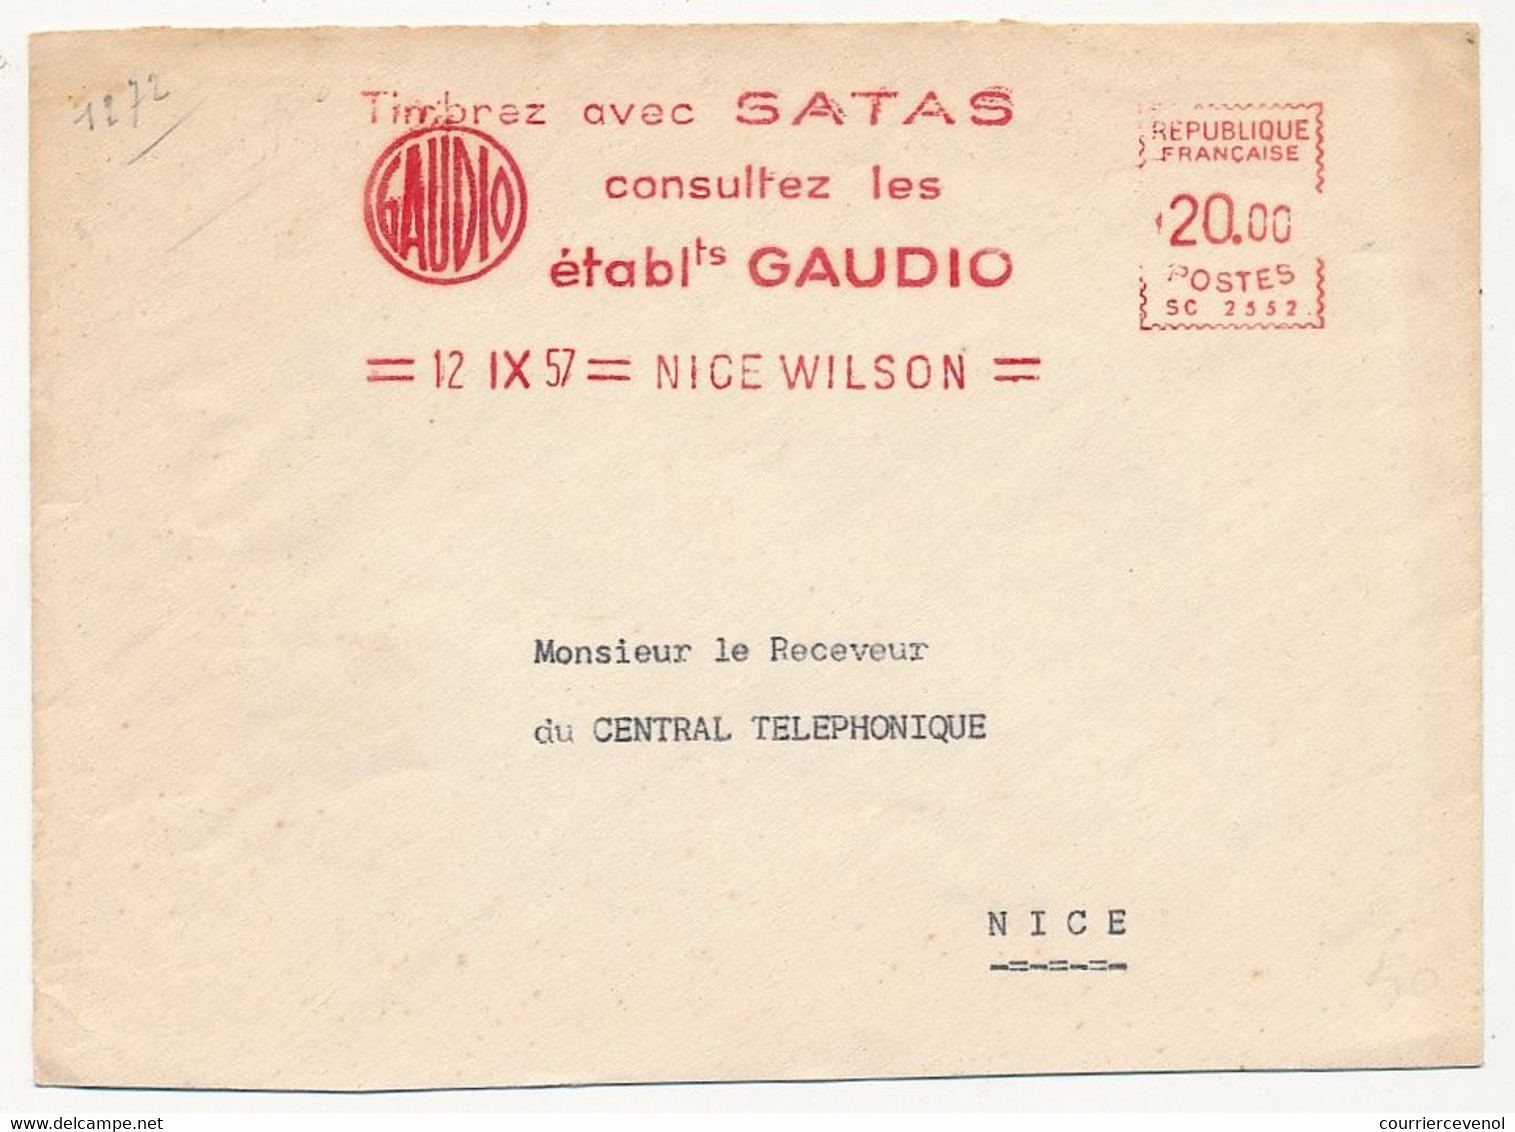 FRANCE - Enveloppe EMA - Timbrez Avec SATAS - Consultez Les Etabl. GAUDIO - 12/9/1957 - NICE WILSON - Freistempel